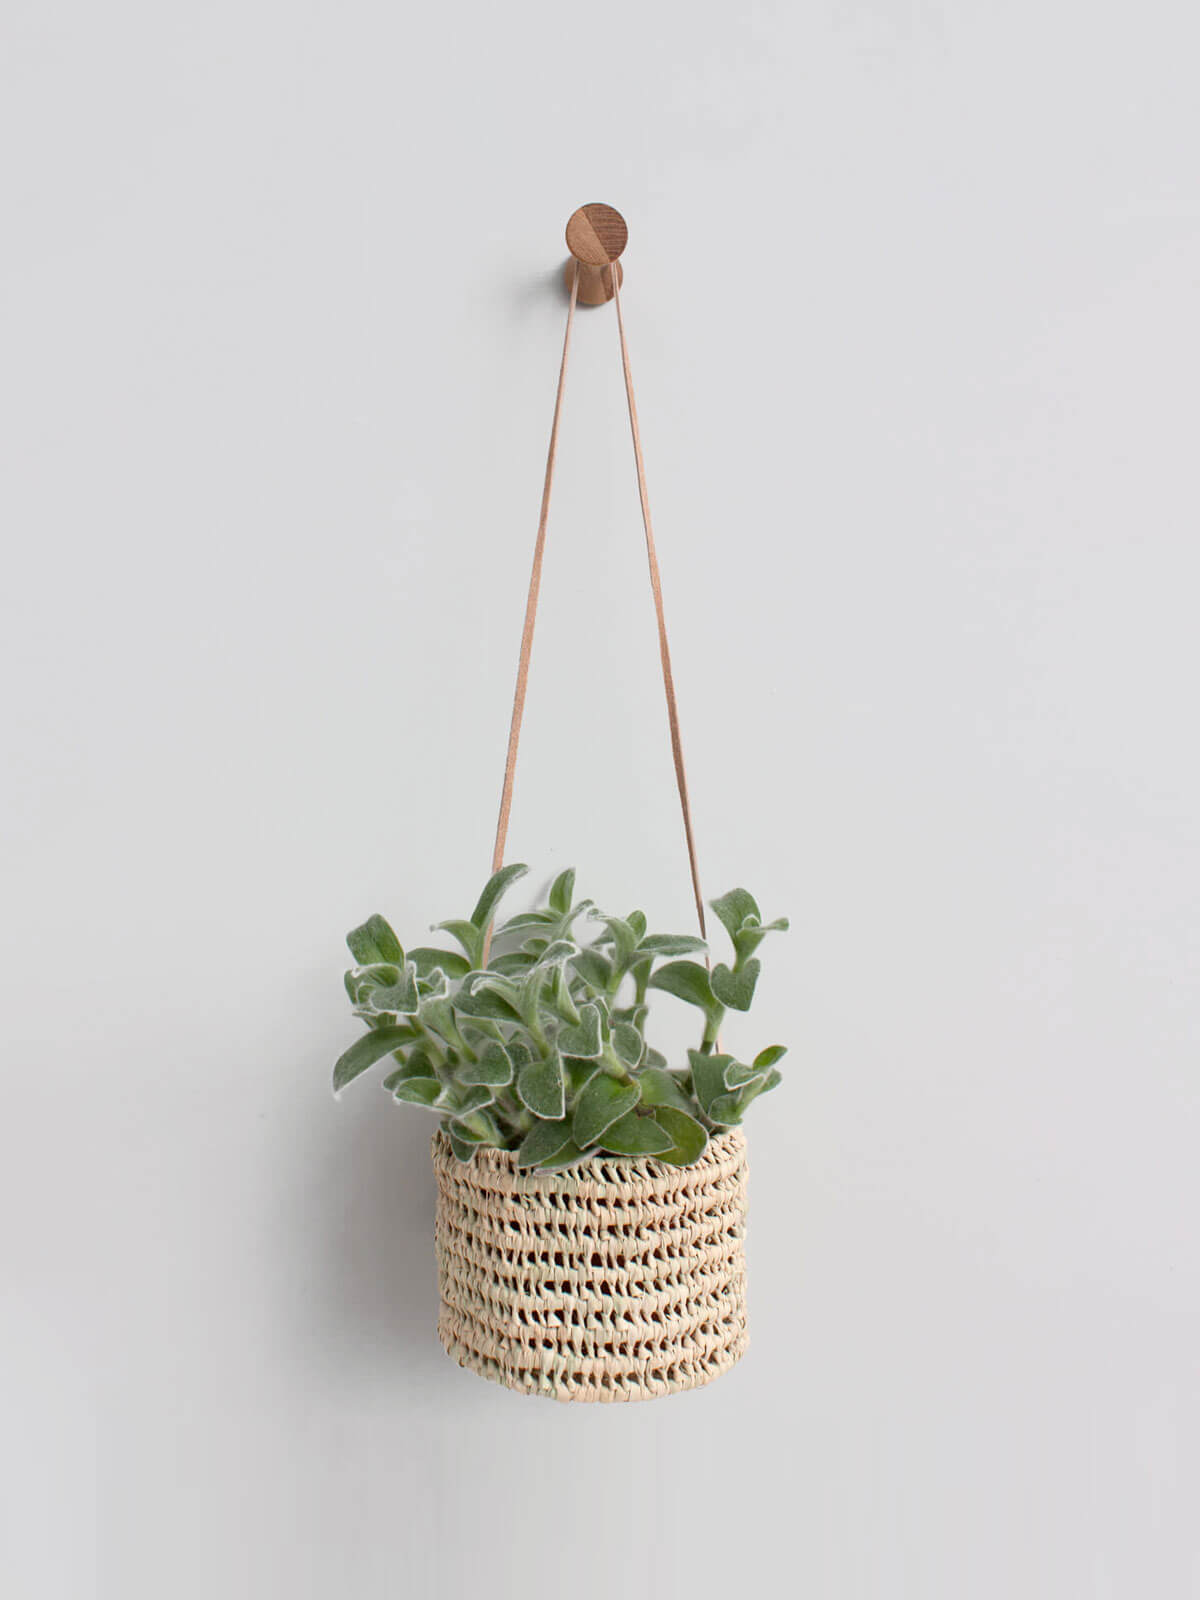 Open Weave Hanging Baskets